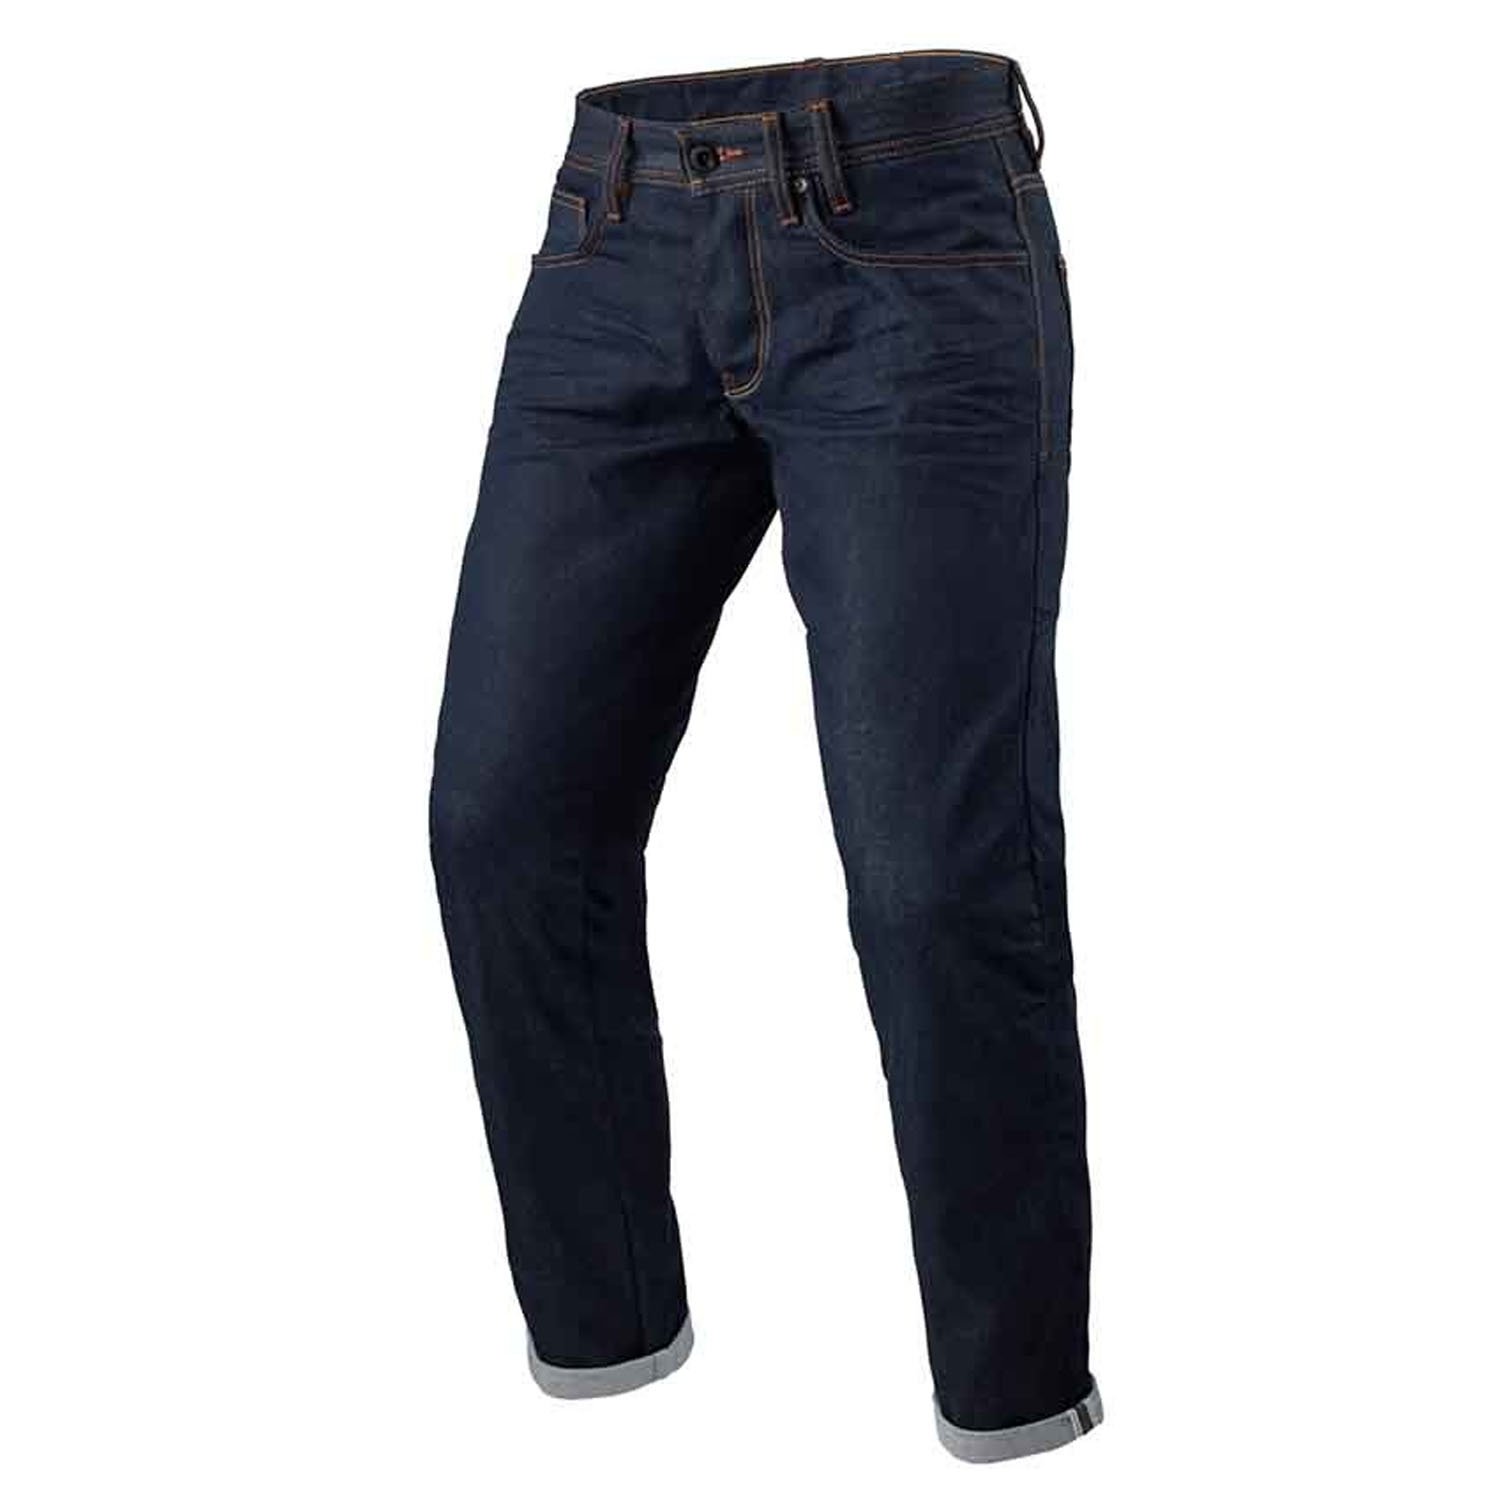 Image of REV'IT! Jeans Lewis Selvedge TF Dark Blue L36 Motorcycle Pants Größe L36/W34